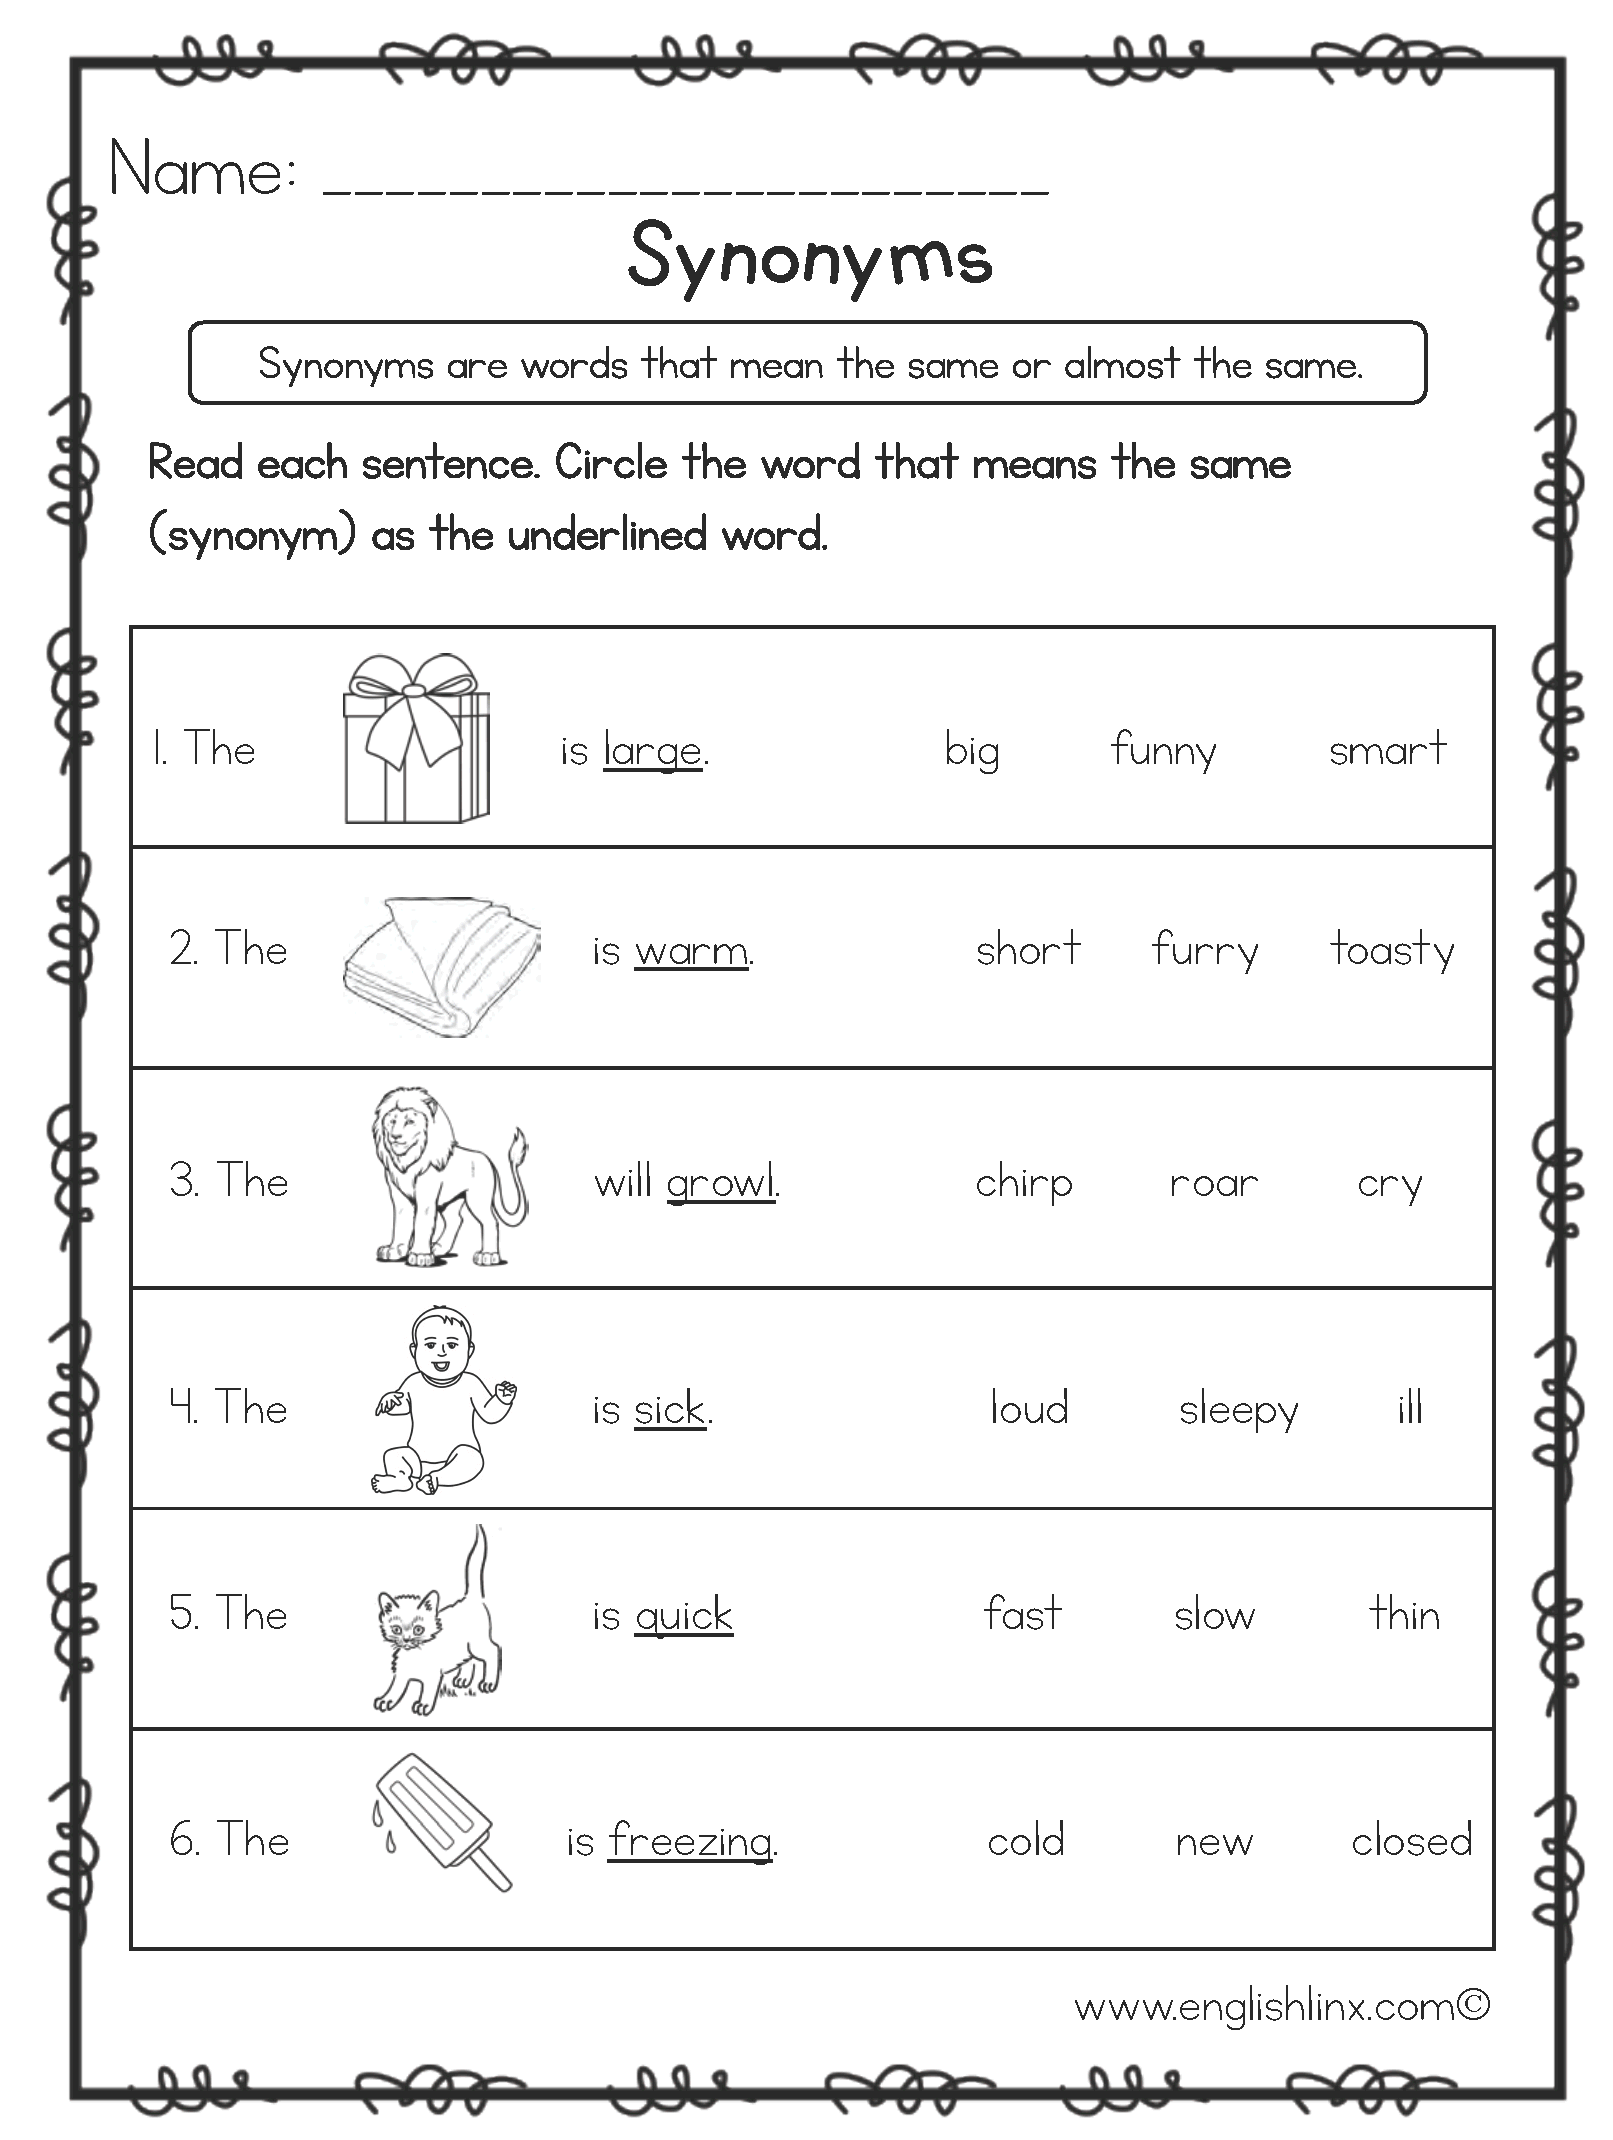 synonym worksheet for grade 3